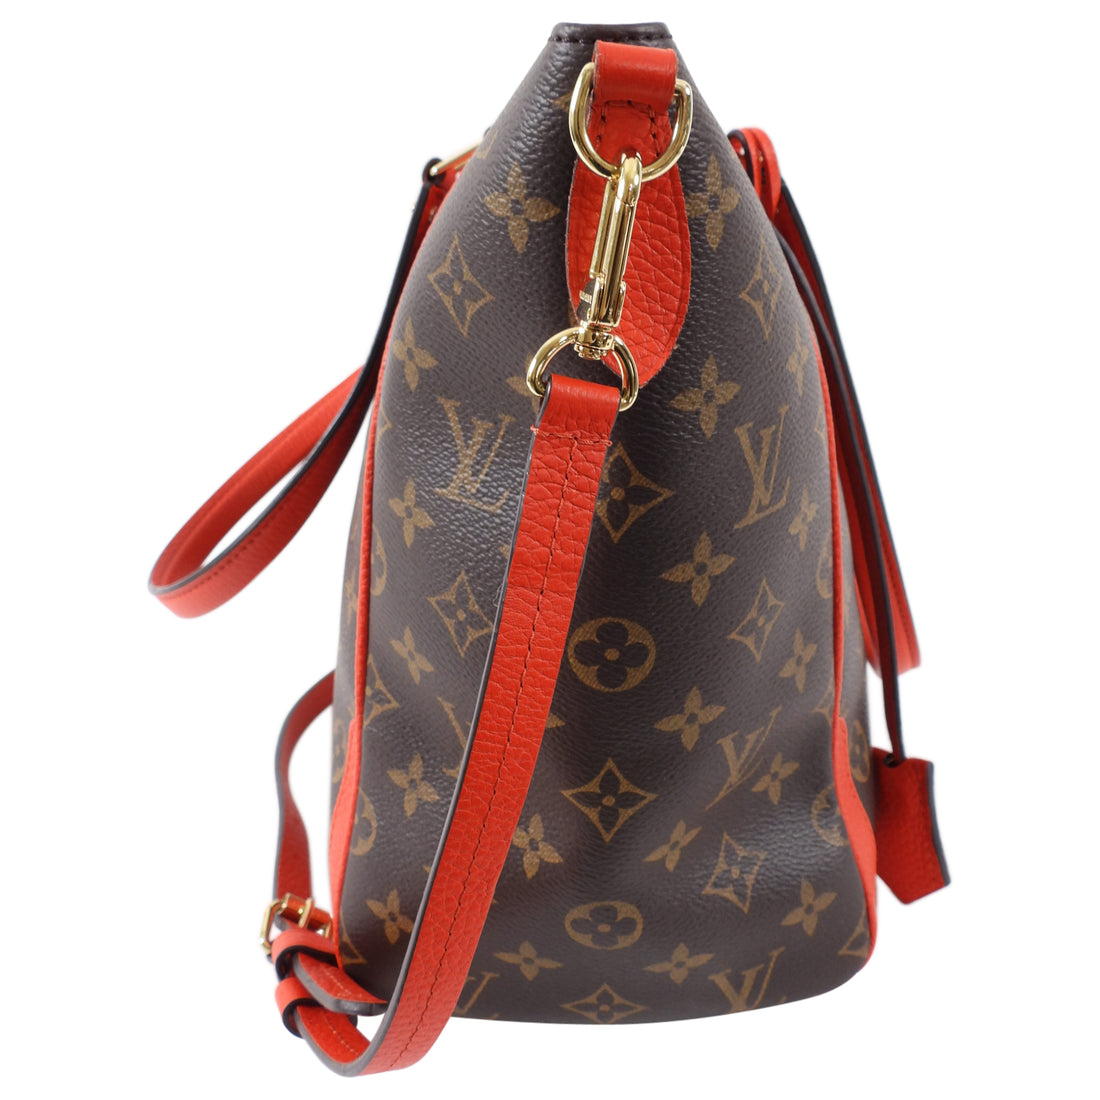 Louis Vuitton Estrela Monogram Bag – Uptown Cheapskate Torrance